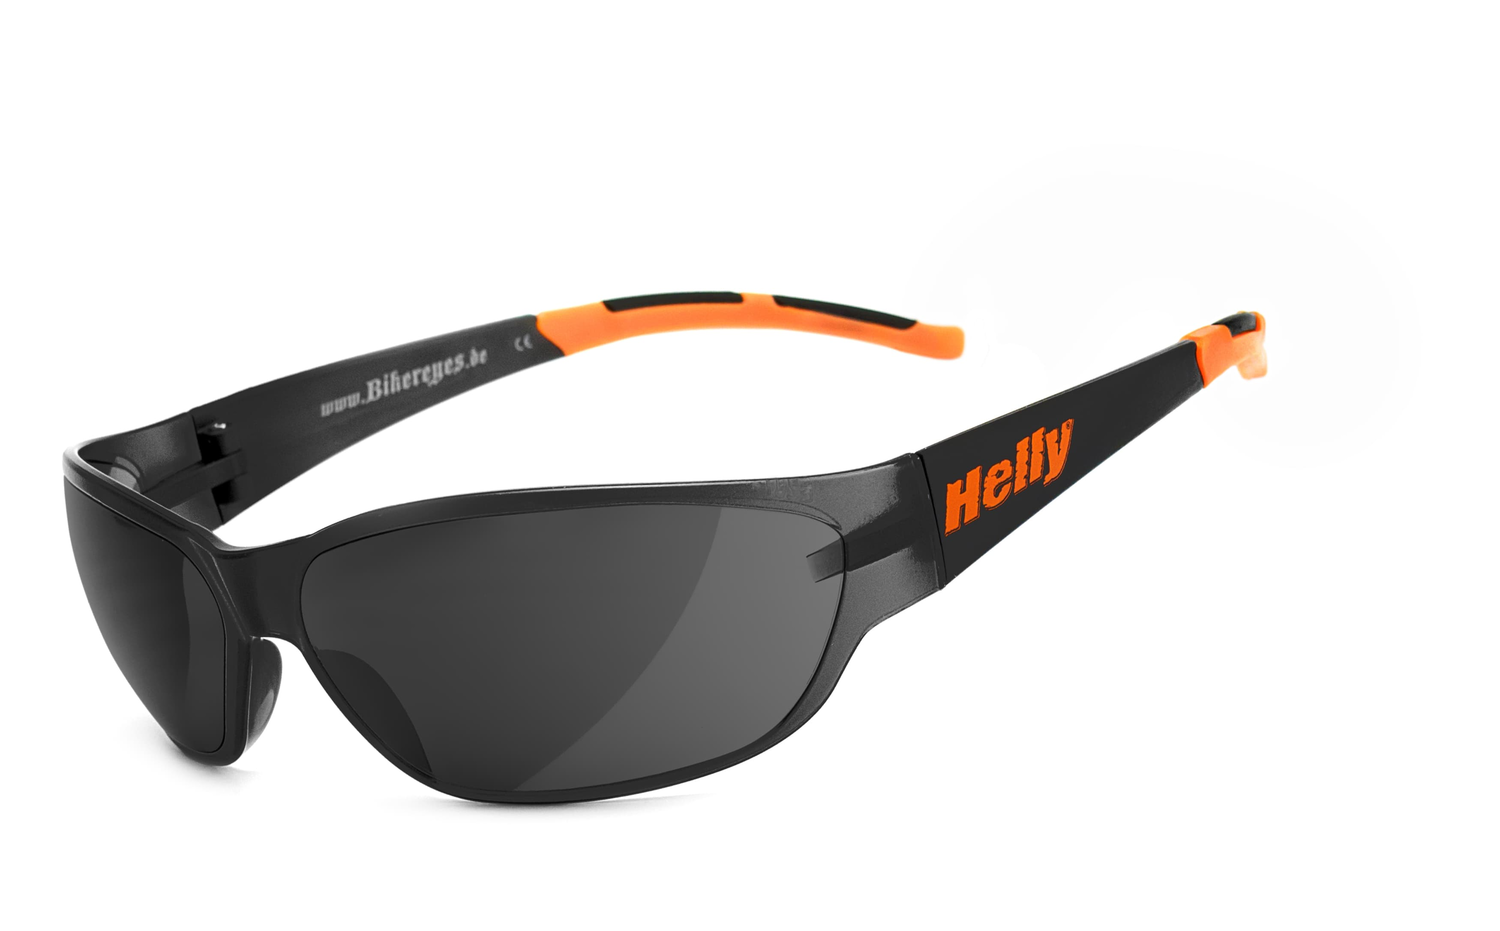 Helly Bikereyes | airshade  Sportbrille, Fahrradbrille, Sonnenbrille, Bikerbrille, Radbrille, UV400 Schutzfilter